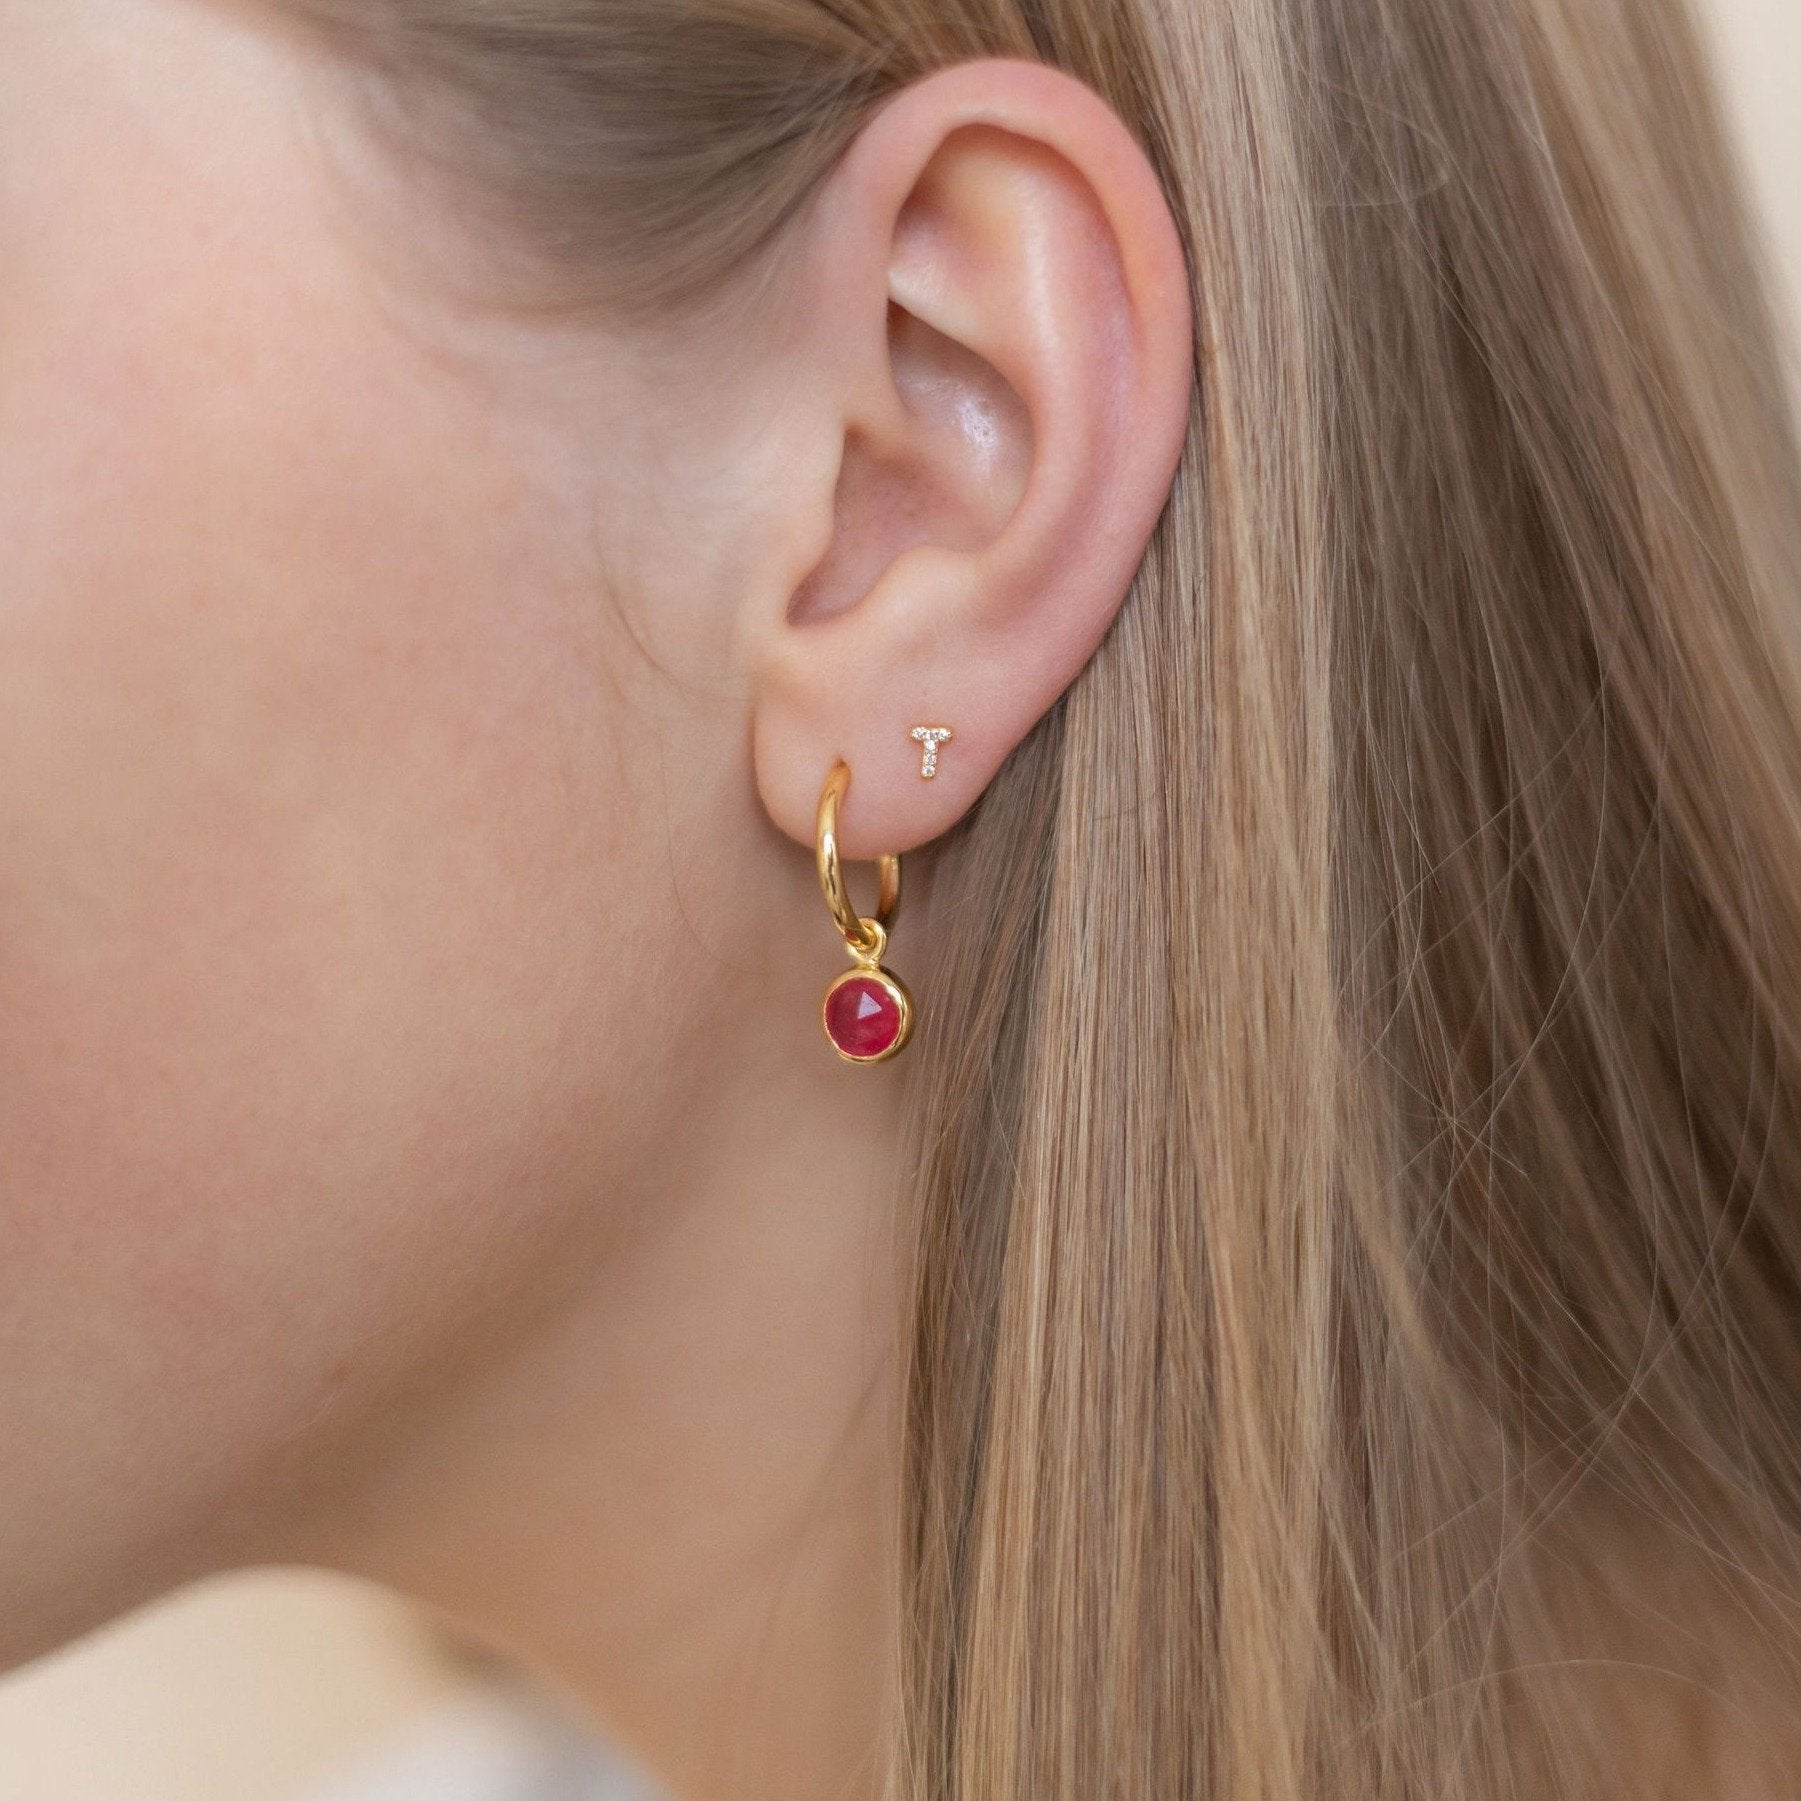 Gold Initial Stud Earrings with Cubic Zirconia - Lulu B Jewellery